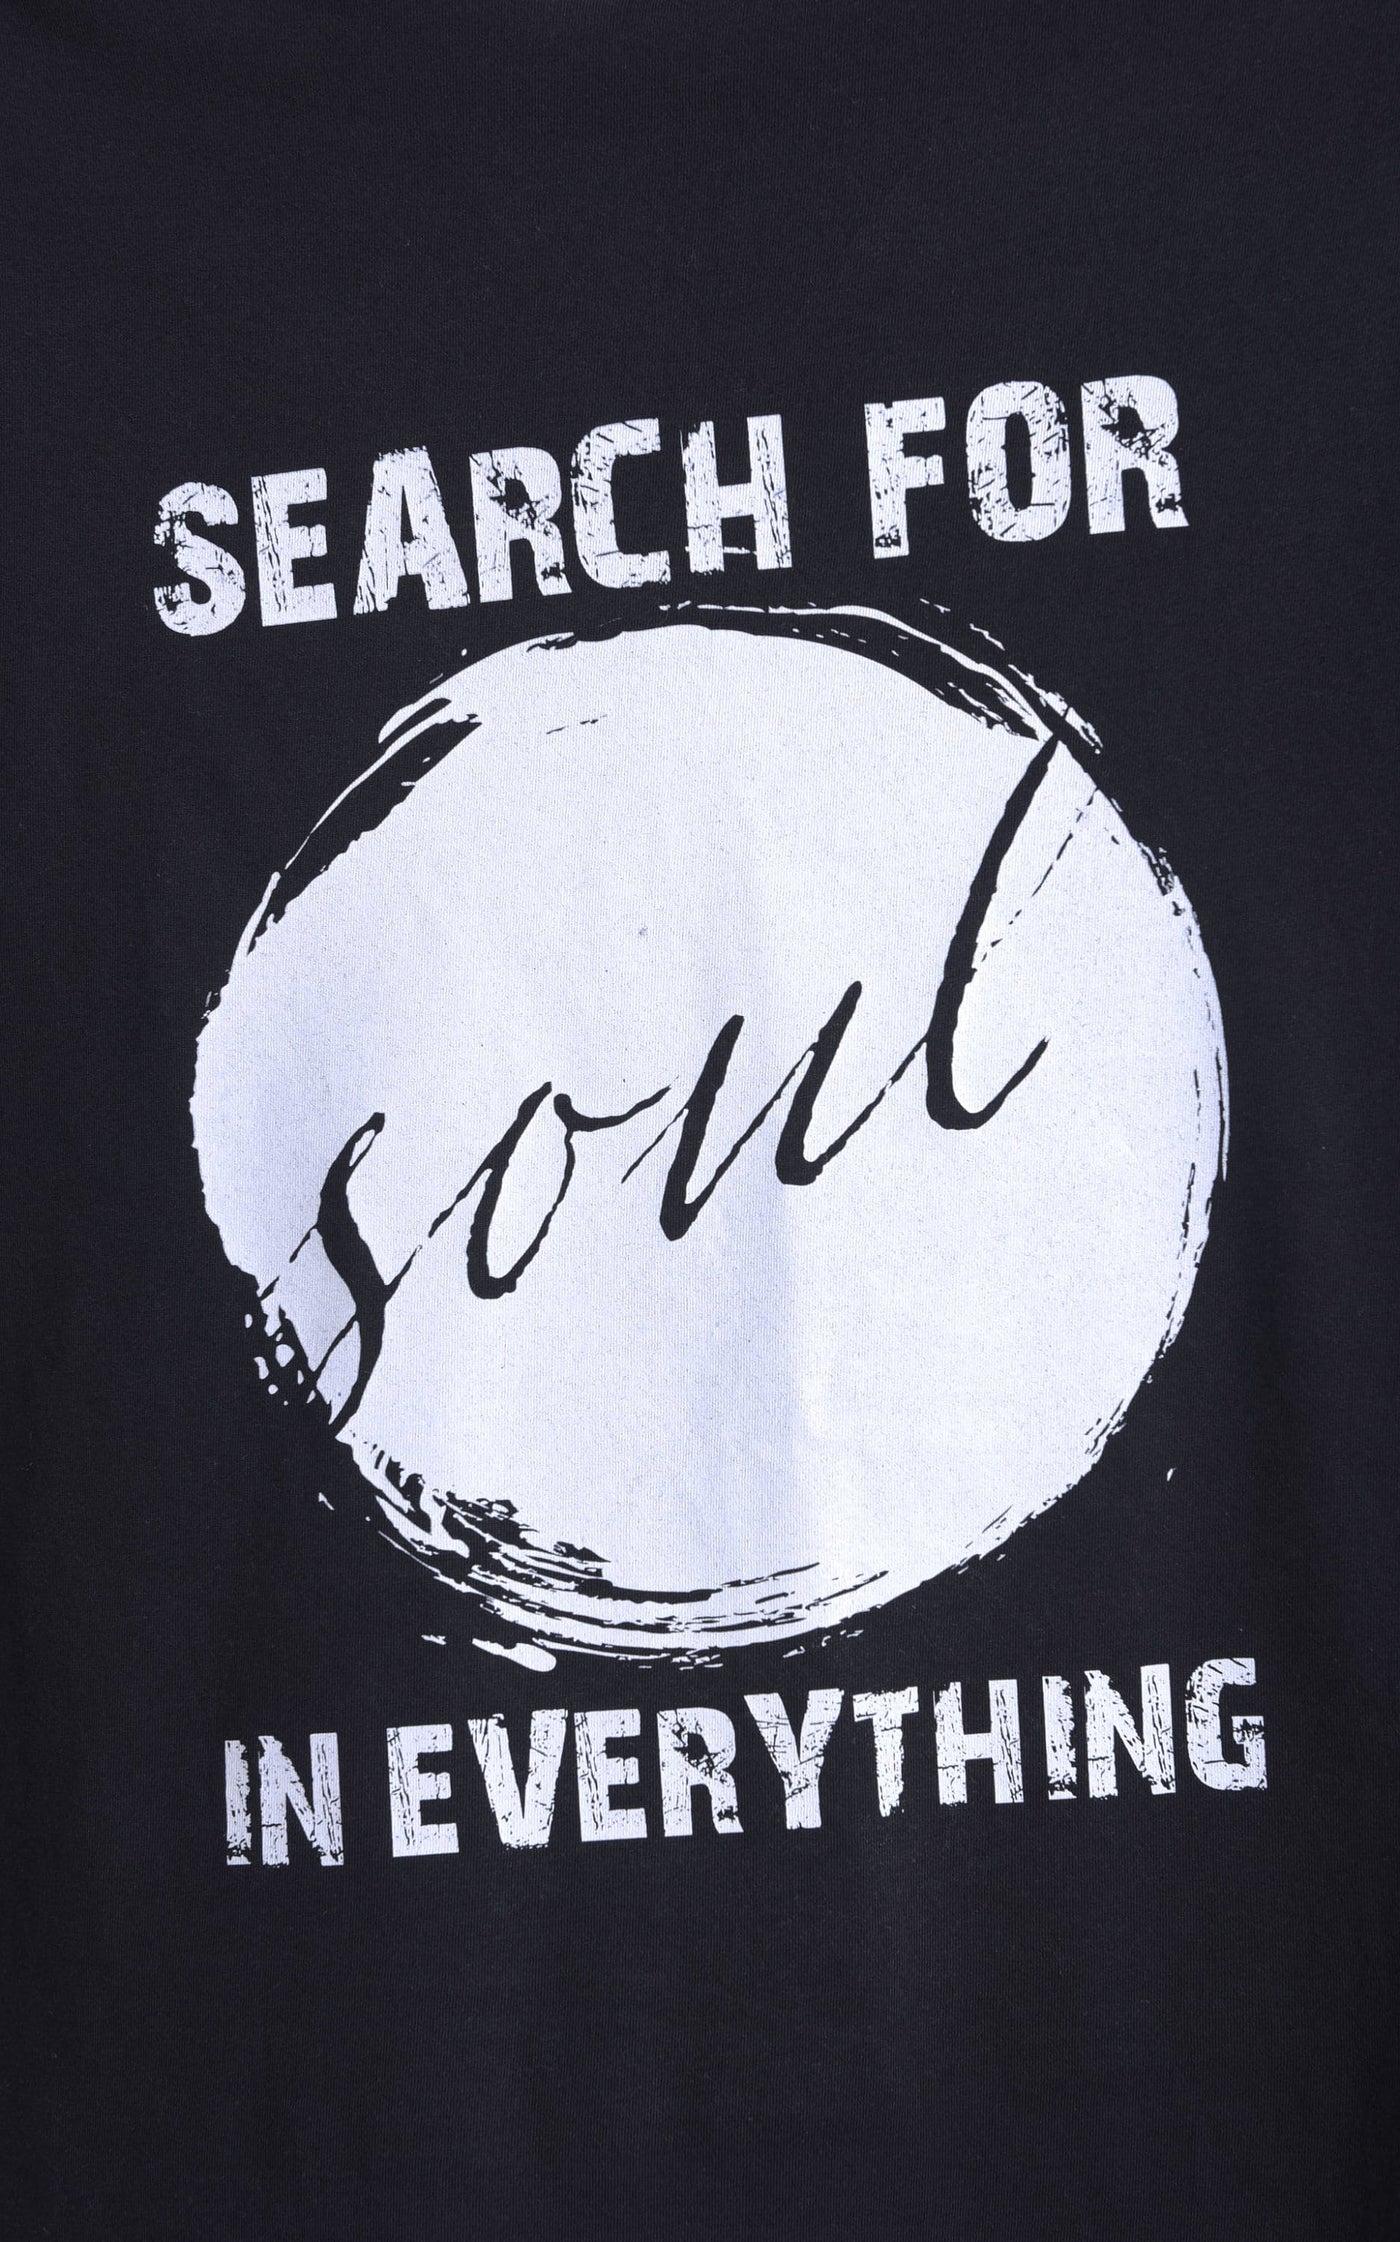 Black Inspirational Slogan T-shirt